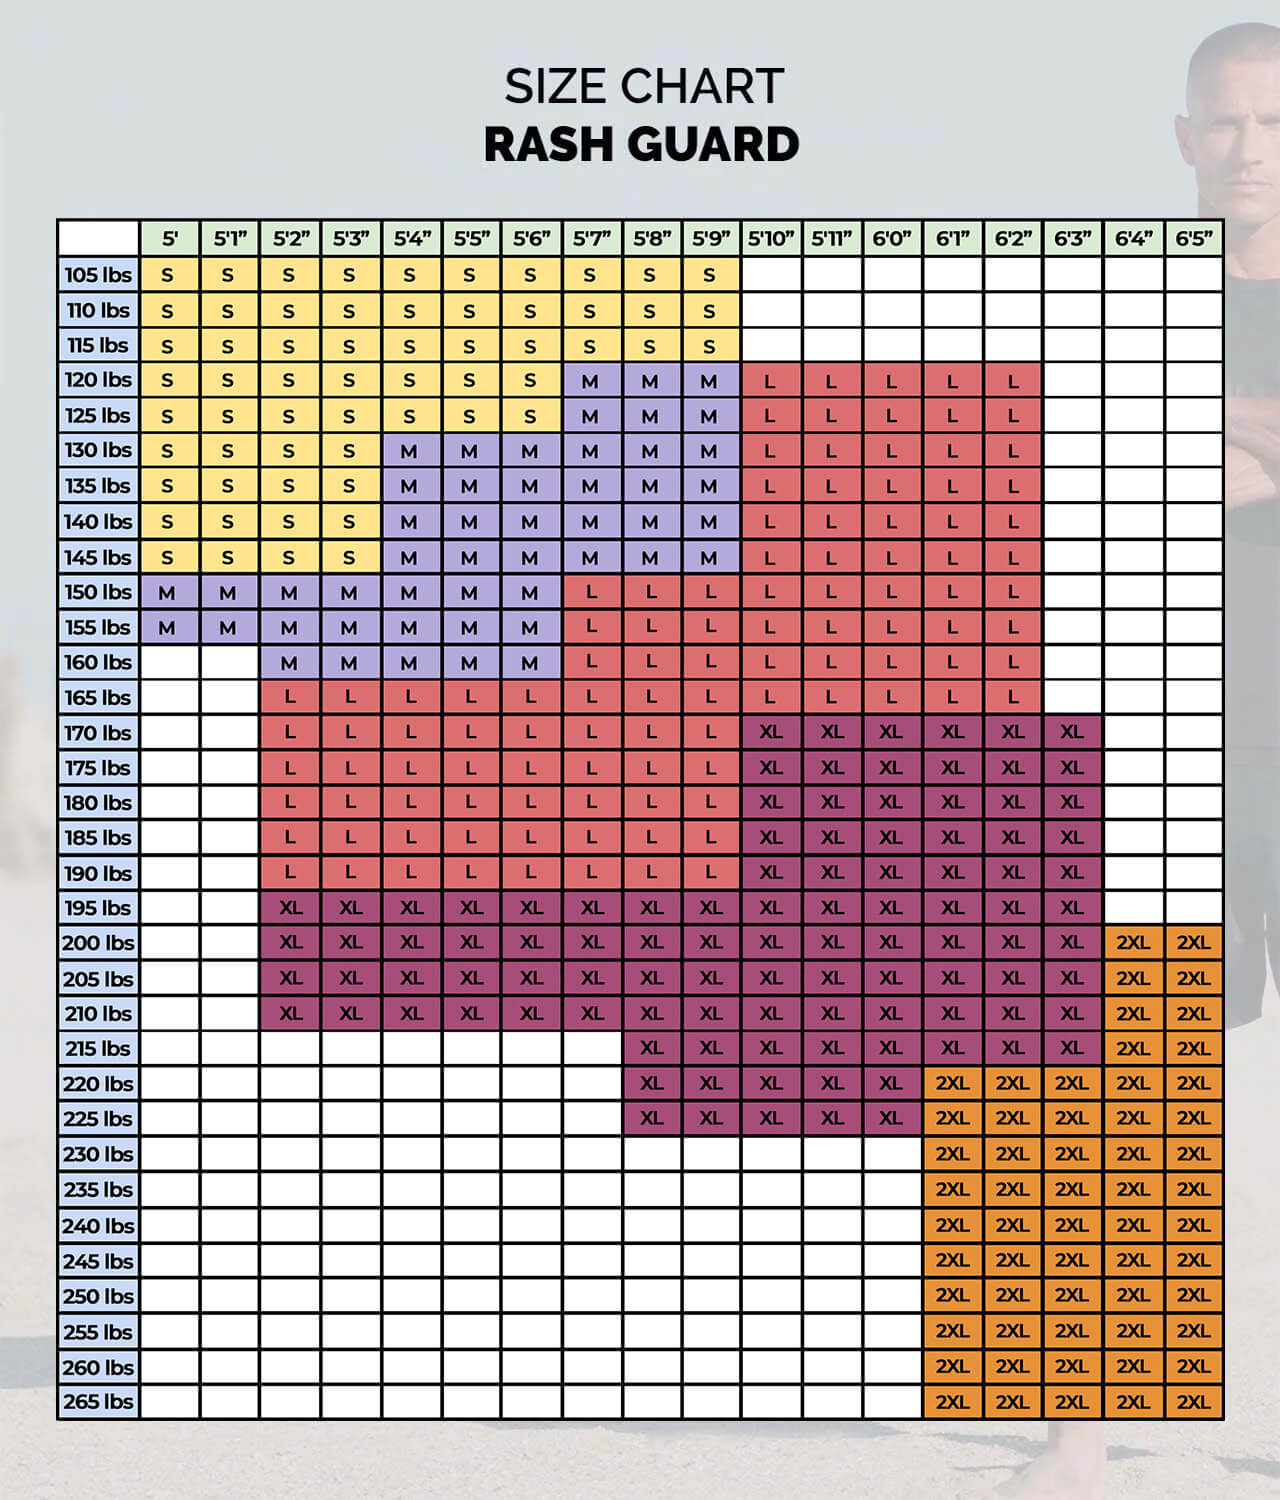 Elite Sports Men's Standard Blue Short Sleeve Jiu Jitsu BJJ Rash Guard Size Guide